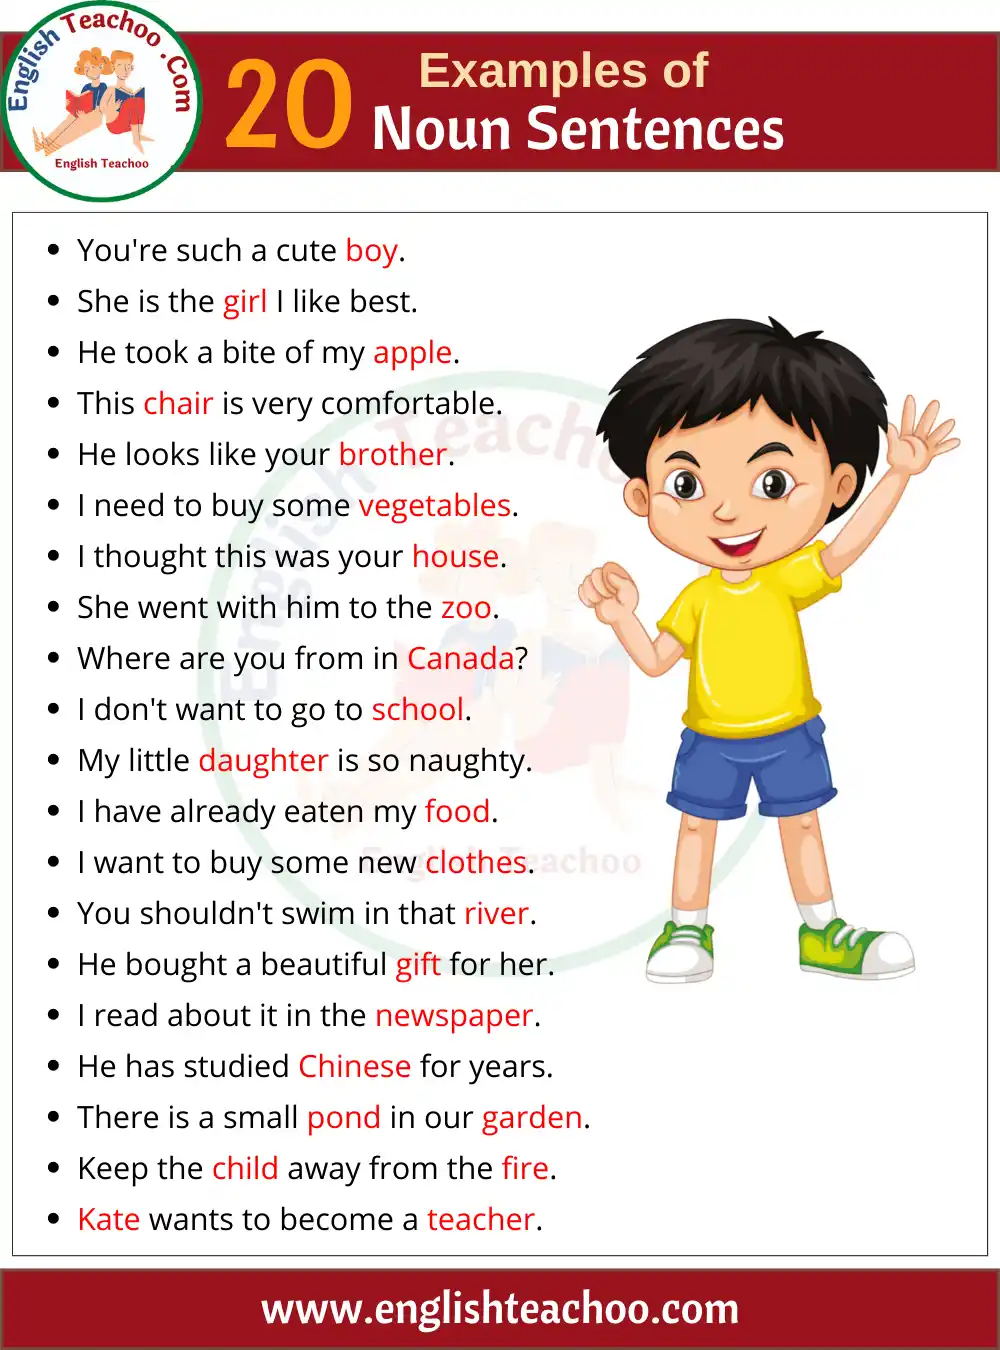 20 Examples of Nouns In Sentences - EnglishTeachoo